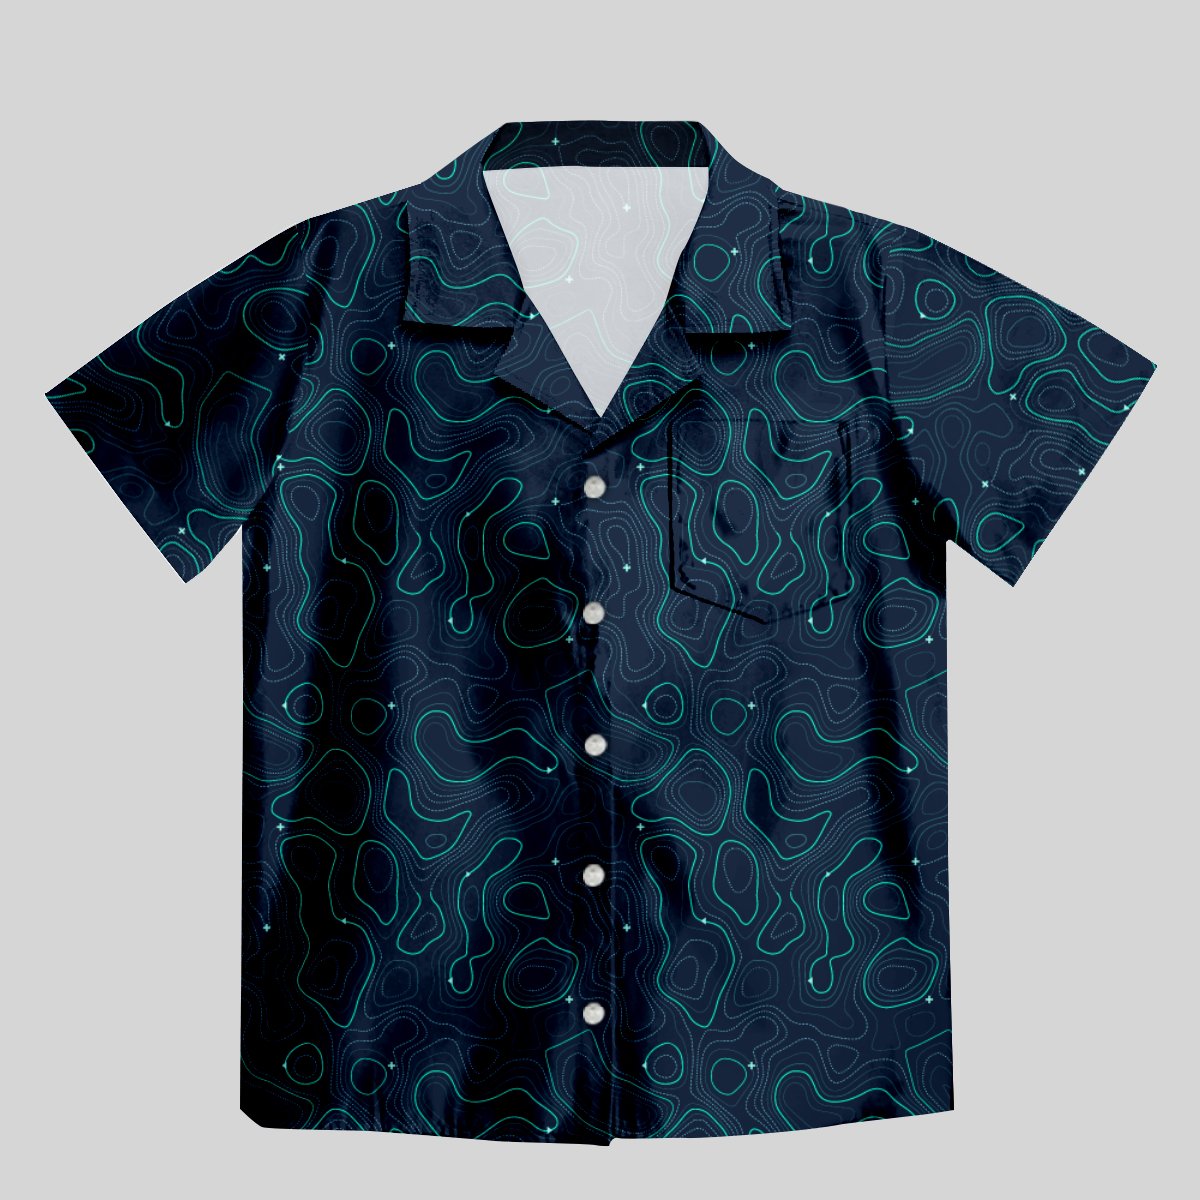 Geographic Contour Navy Blue Button Up Pocket Shirt - Geeksoutfit